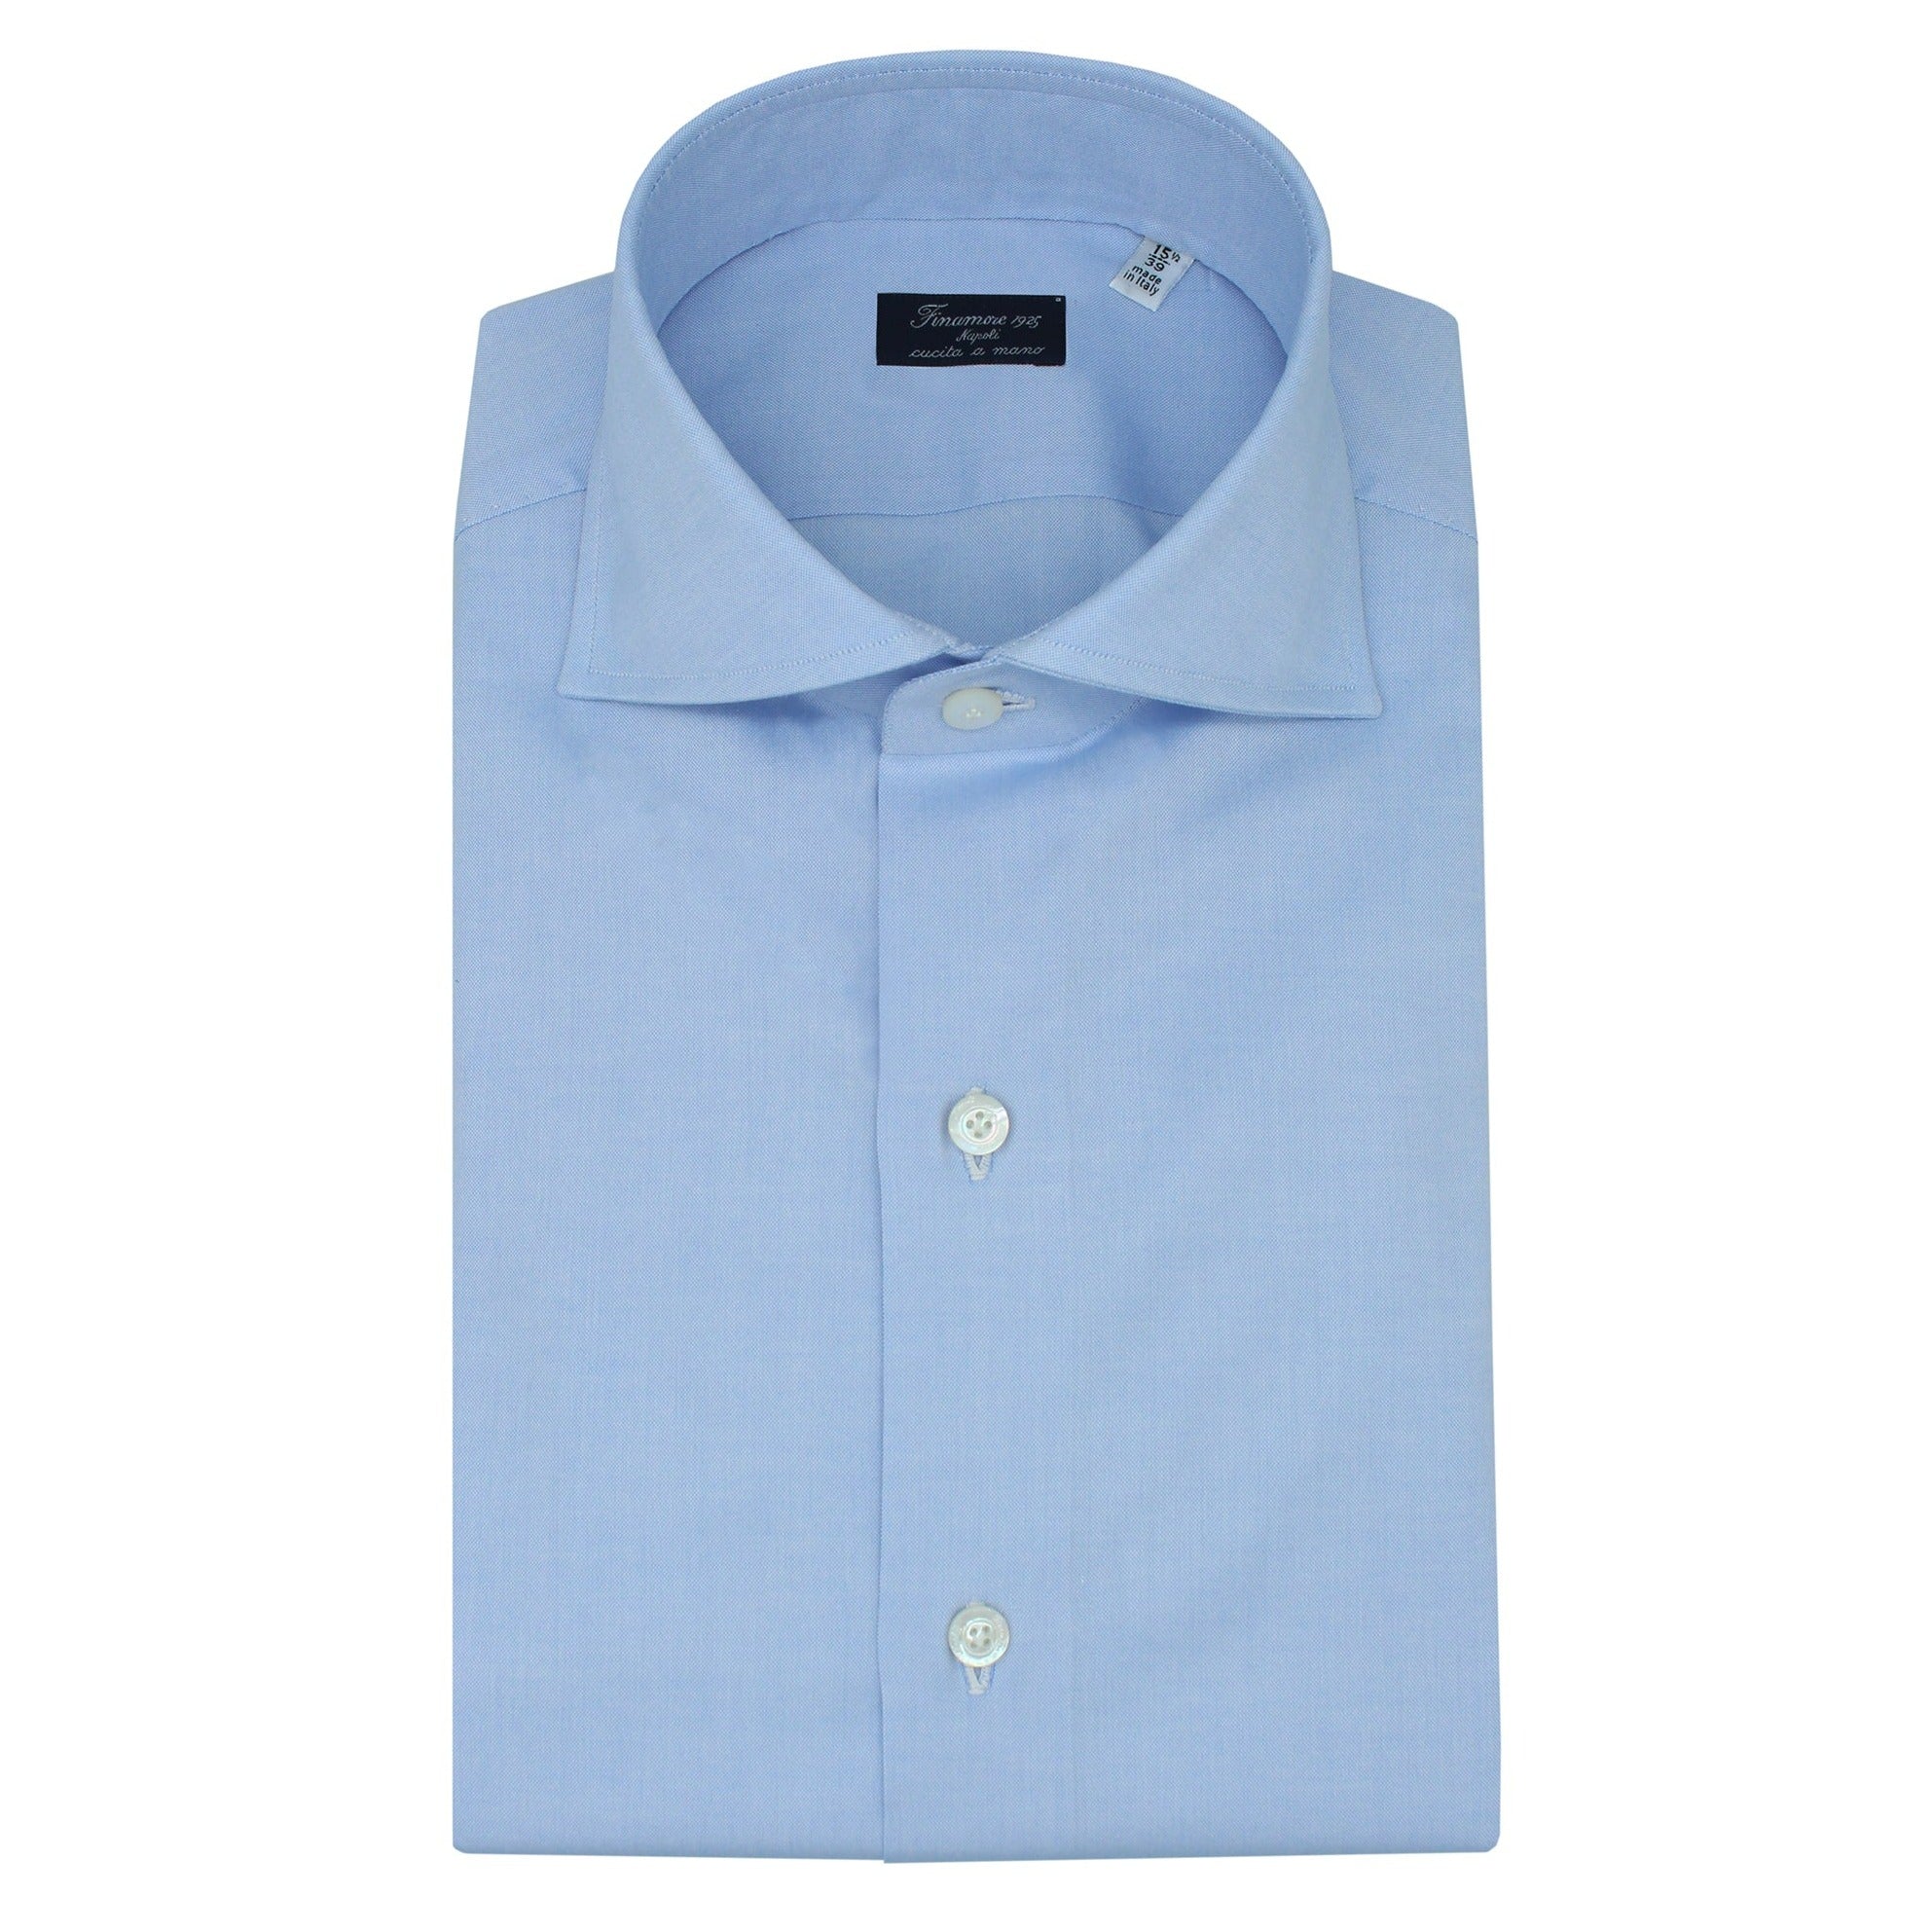 Classic Naples regular fit shirt in light blue zephyr cotton